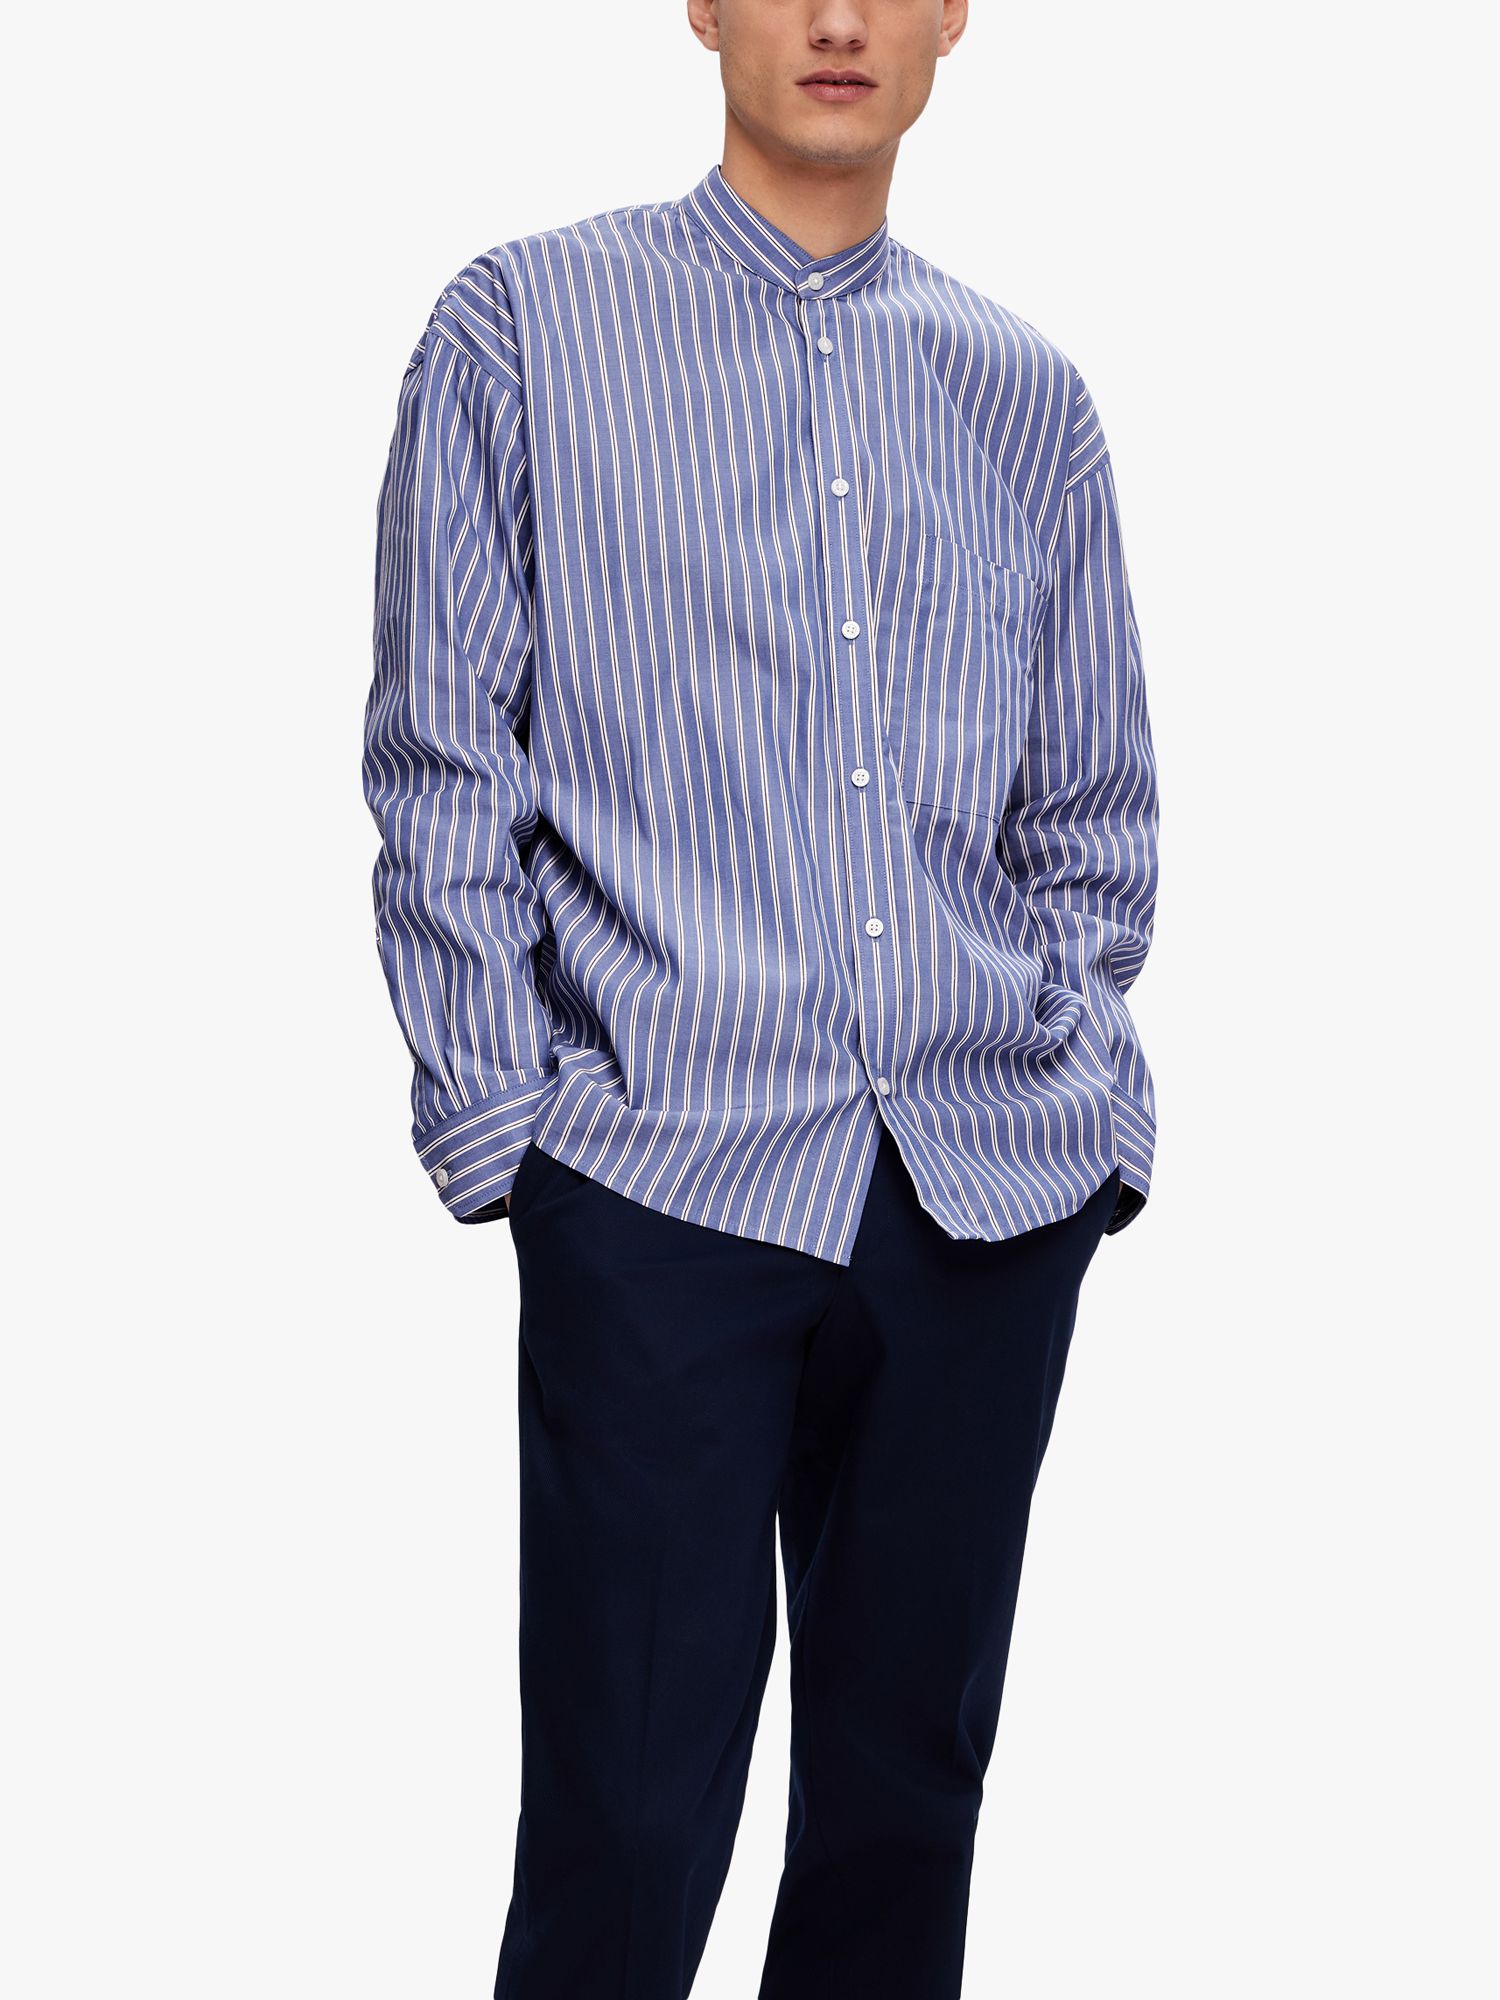 SELECTED HOMME Stripe Formal Long Sleeve Shirt, Blue/White, XL